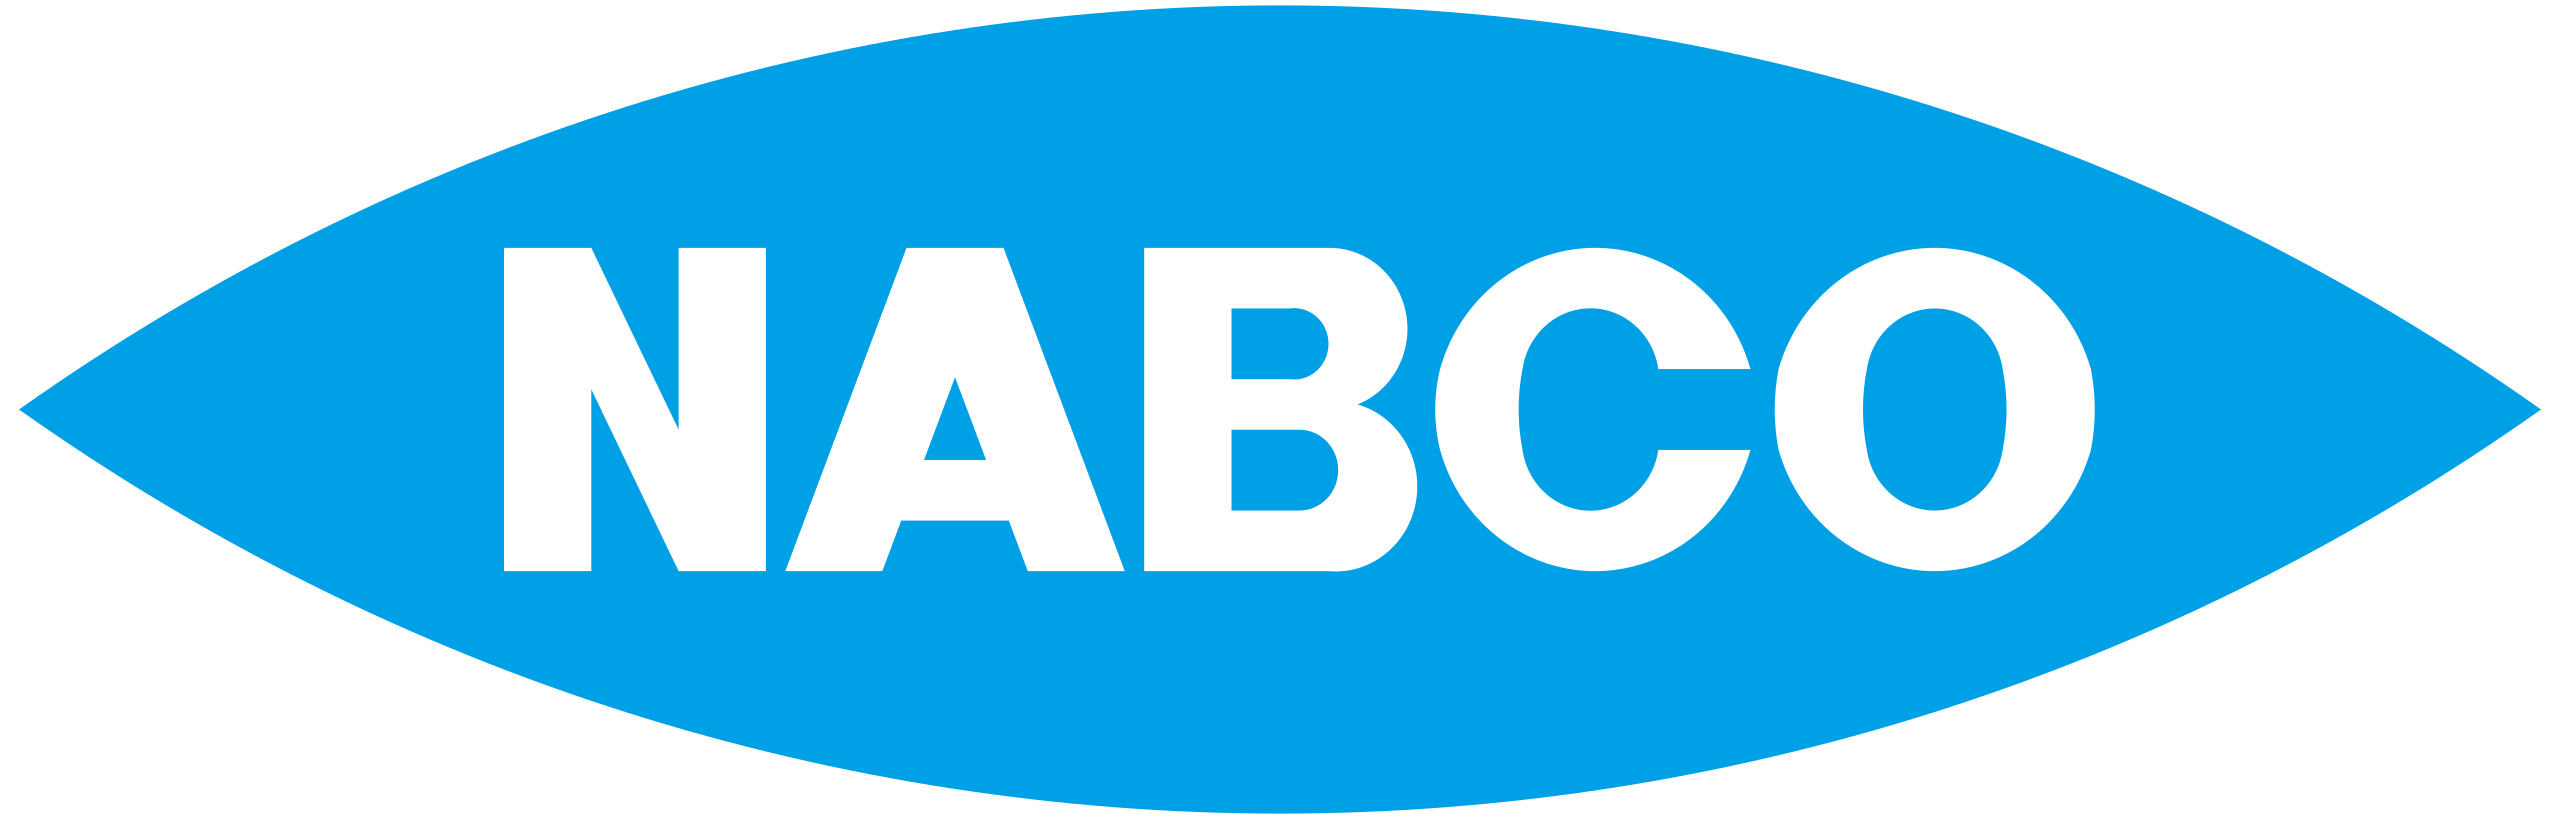 nabco-logo